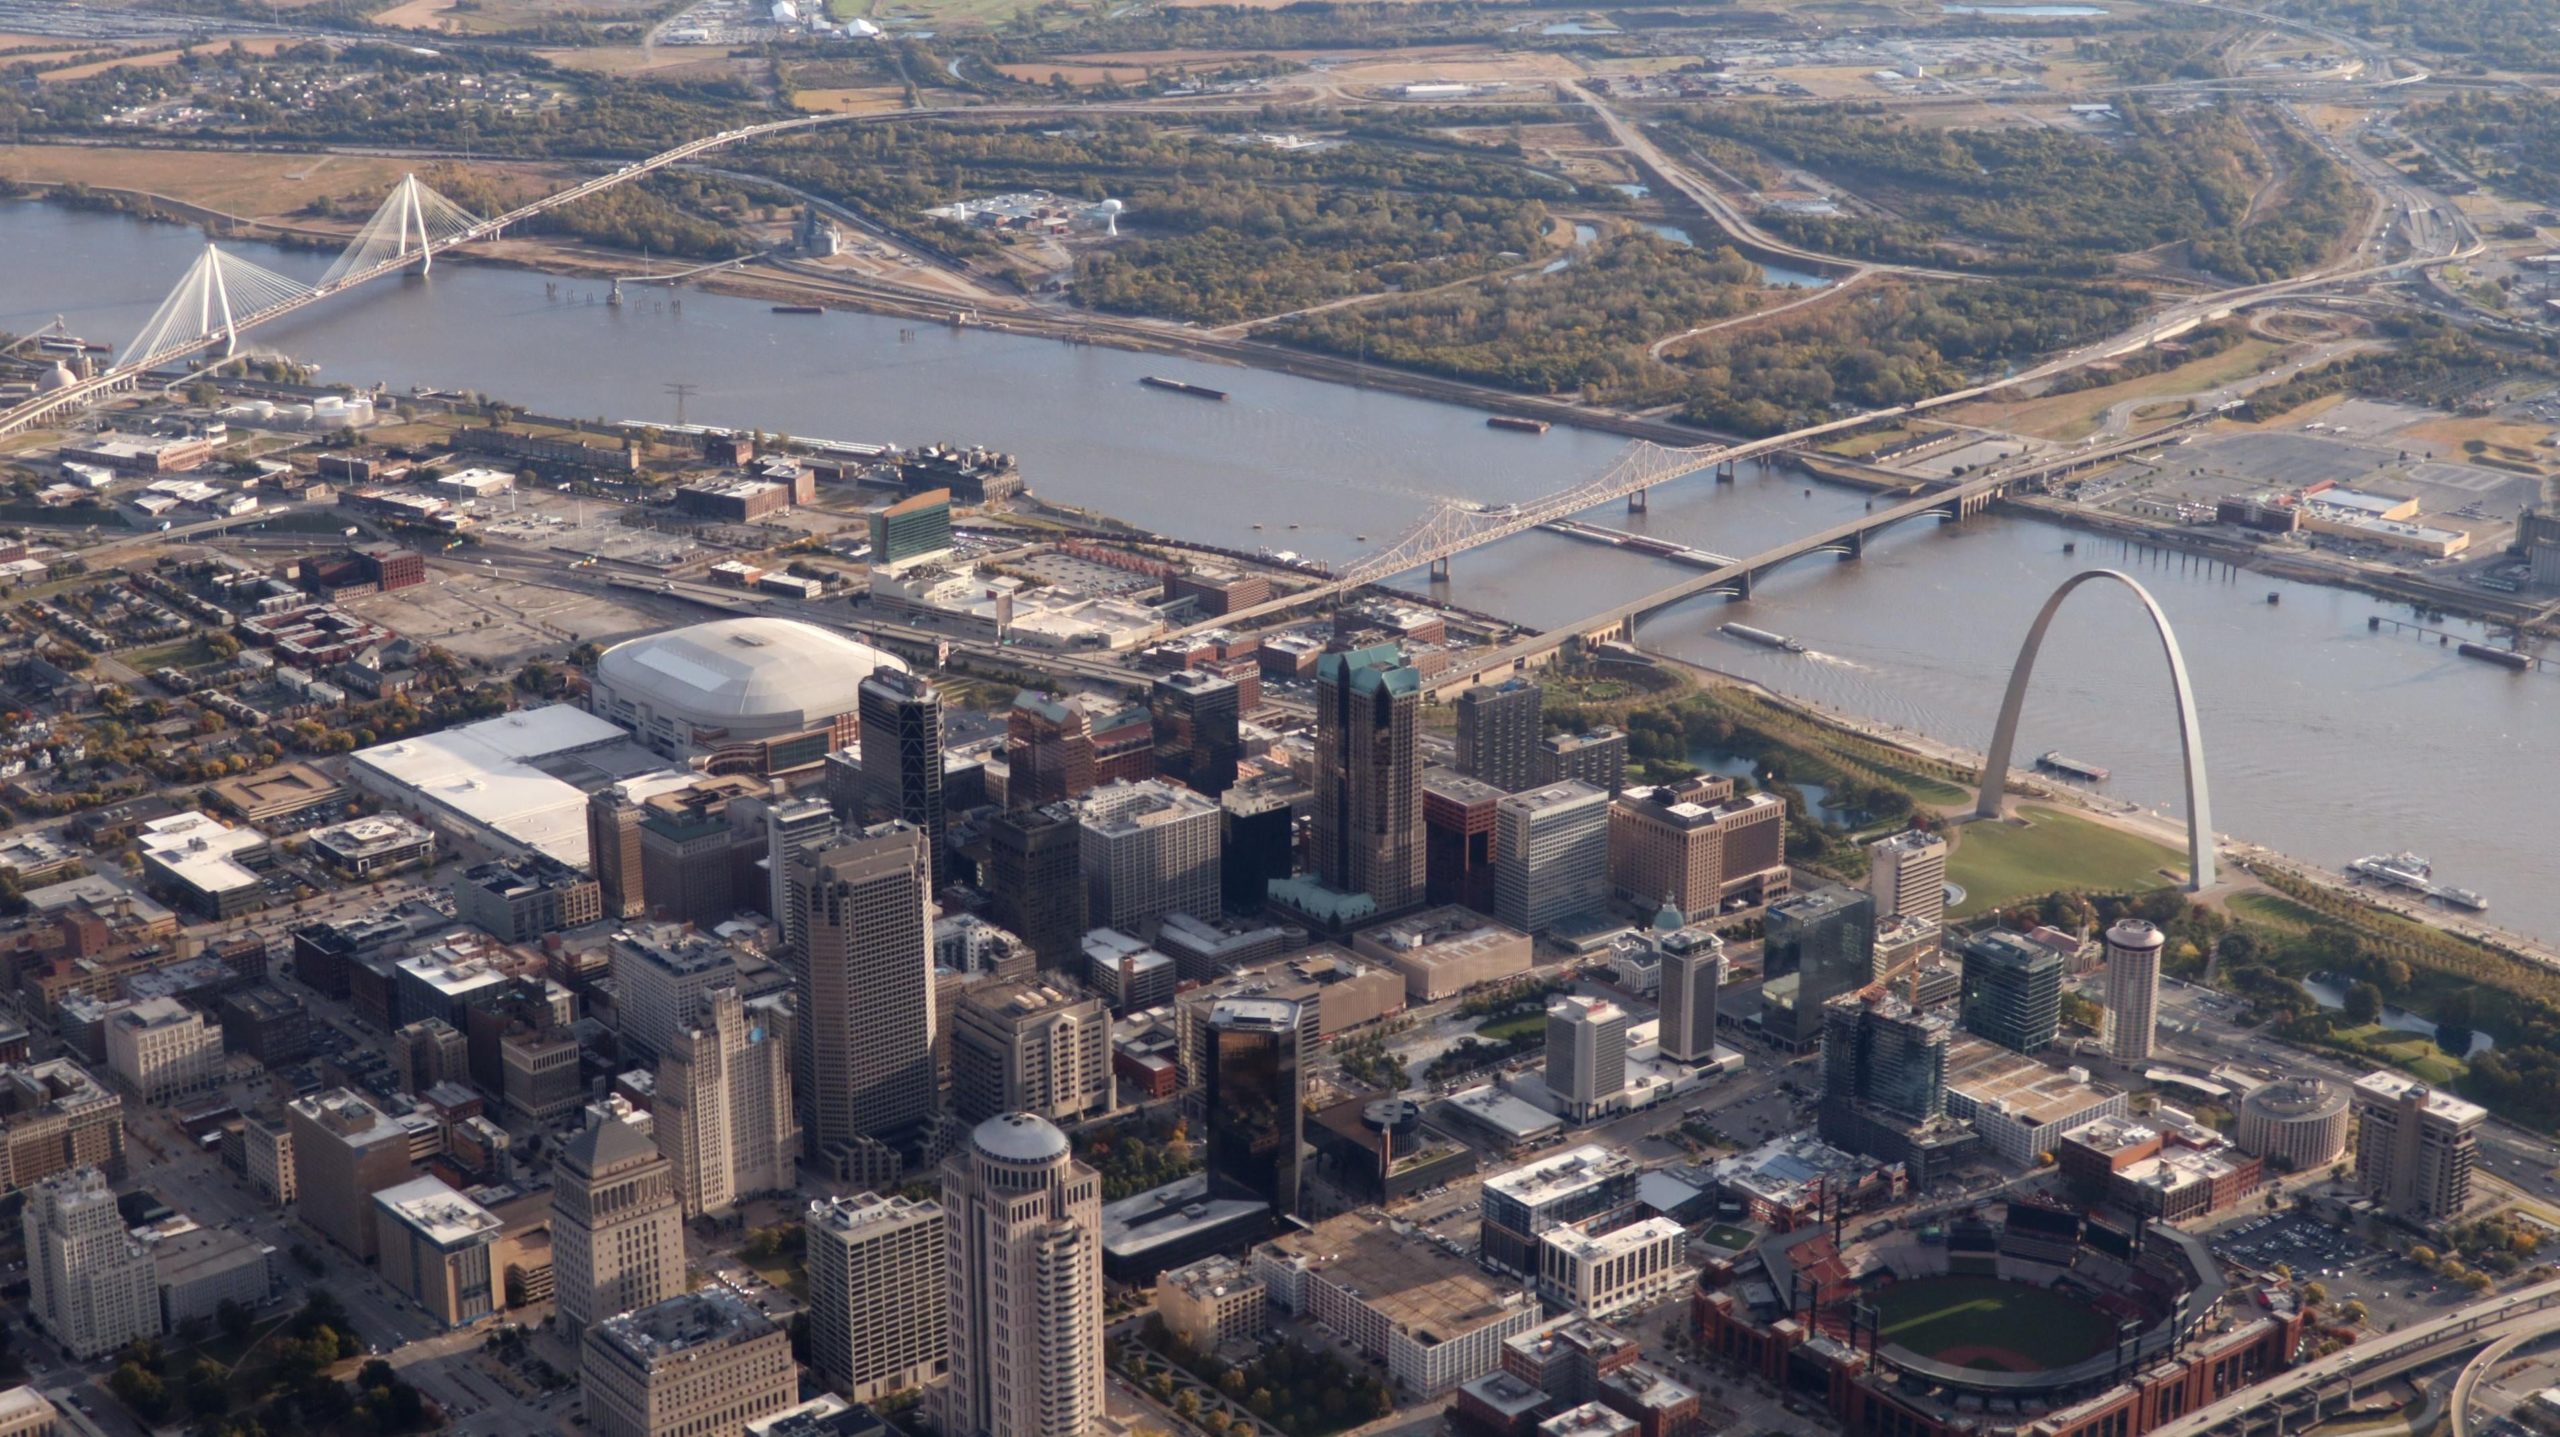 St. Louis, Missouri, abuts the Mississippi River. (Photo: Daniel SLIM / AFP, Getty Images)